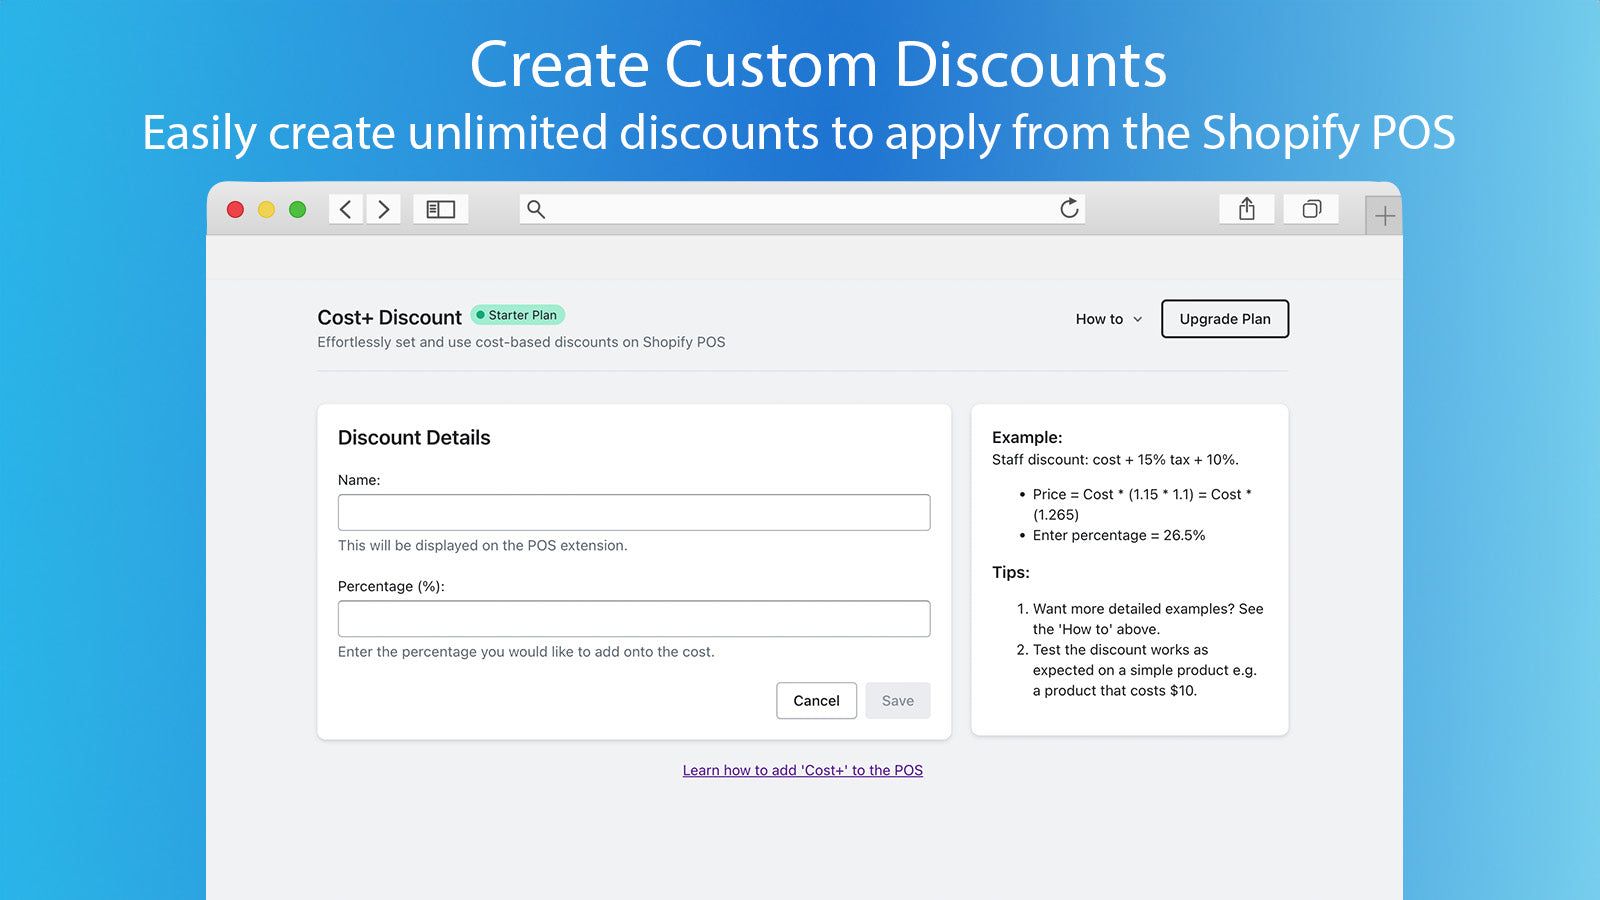 Create unlimited custom discounts